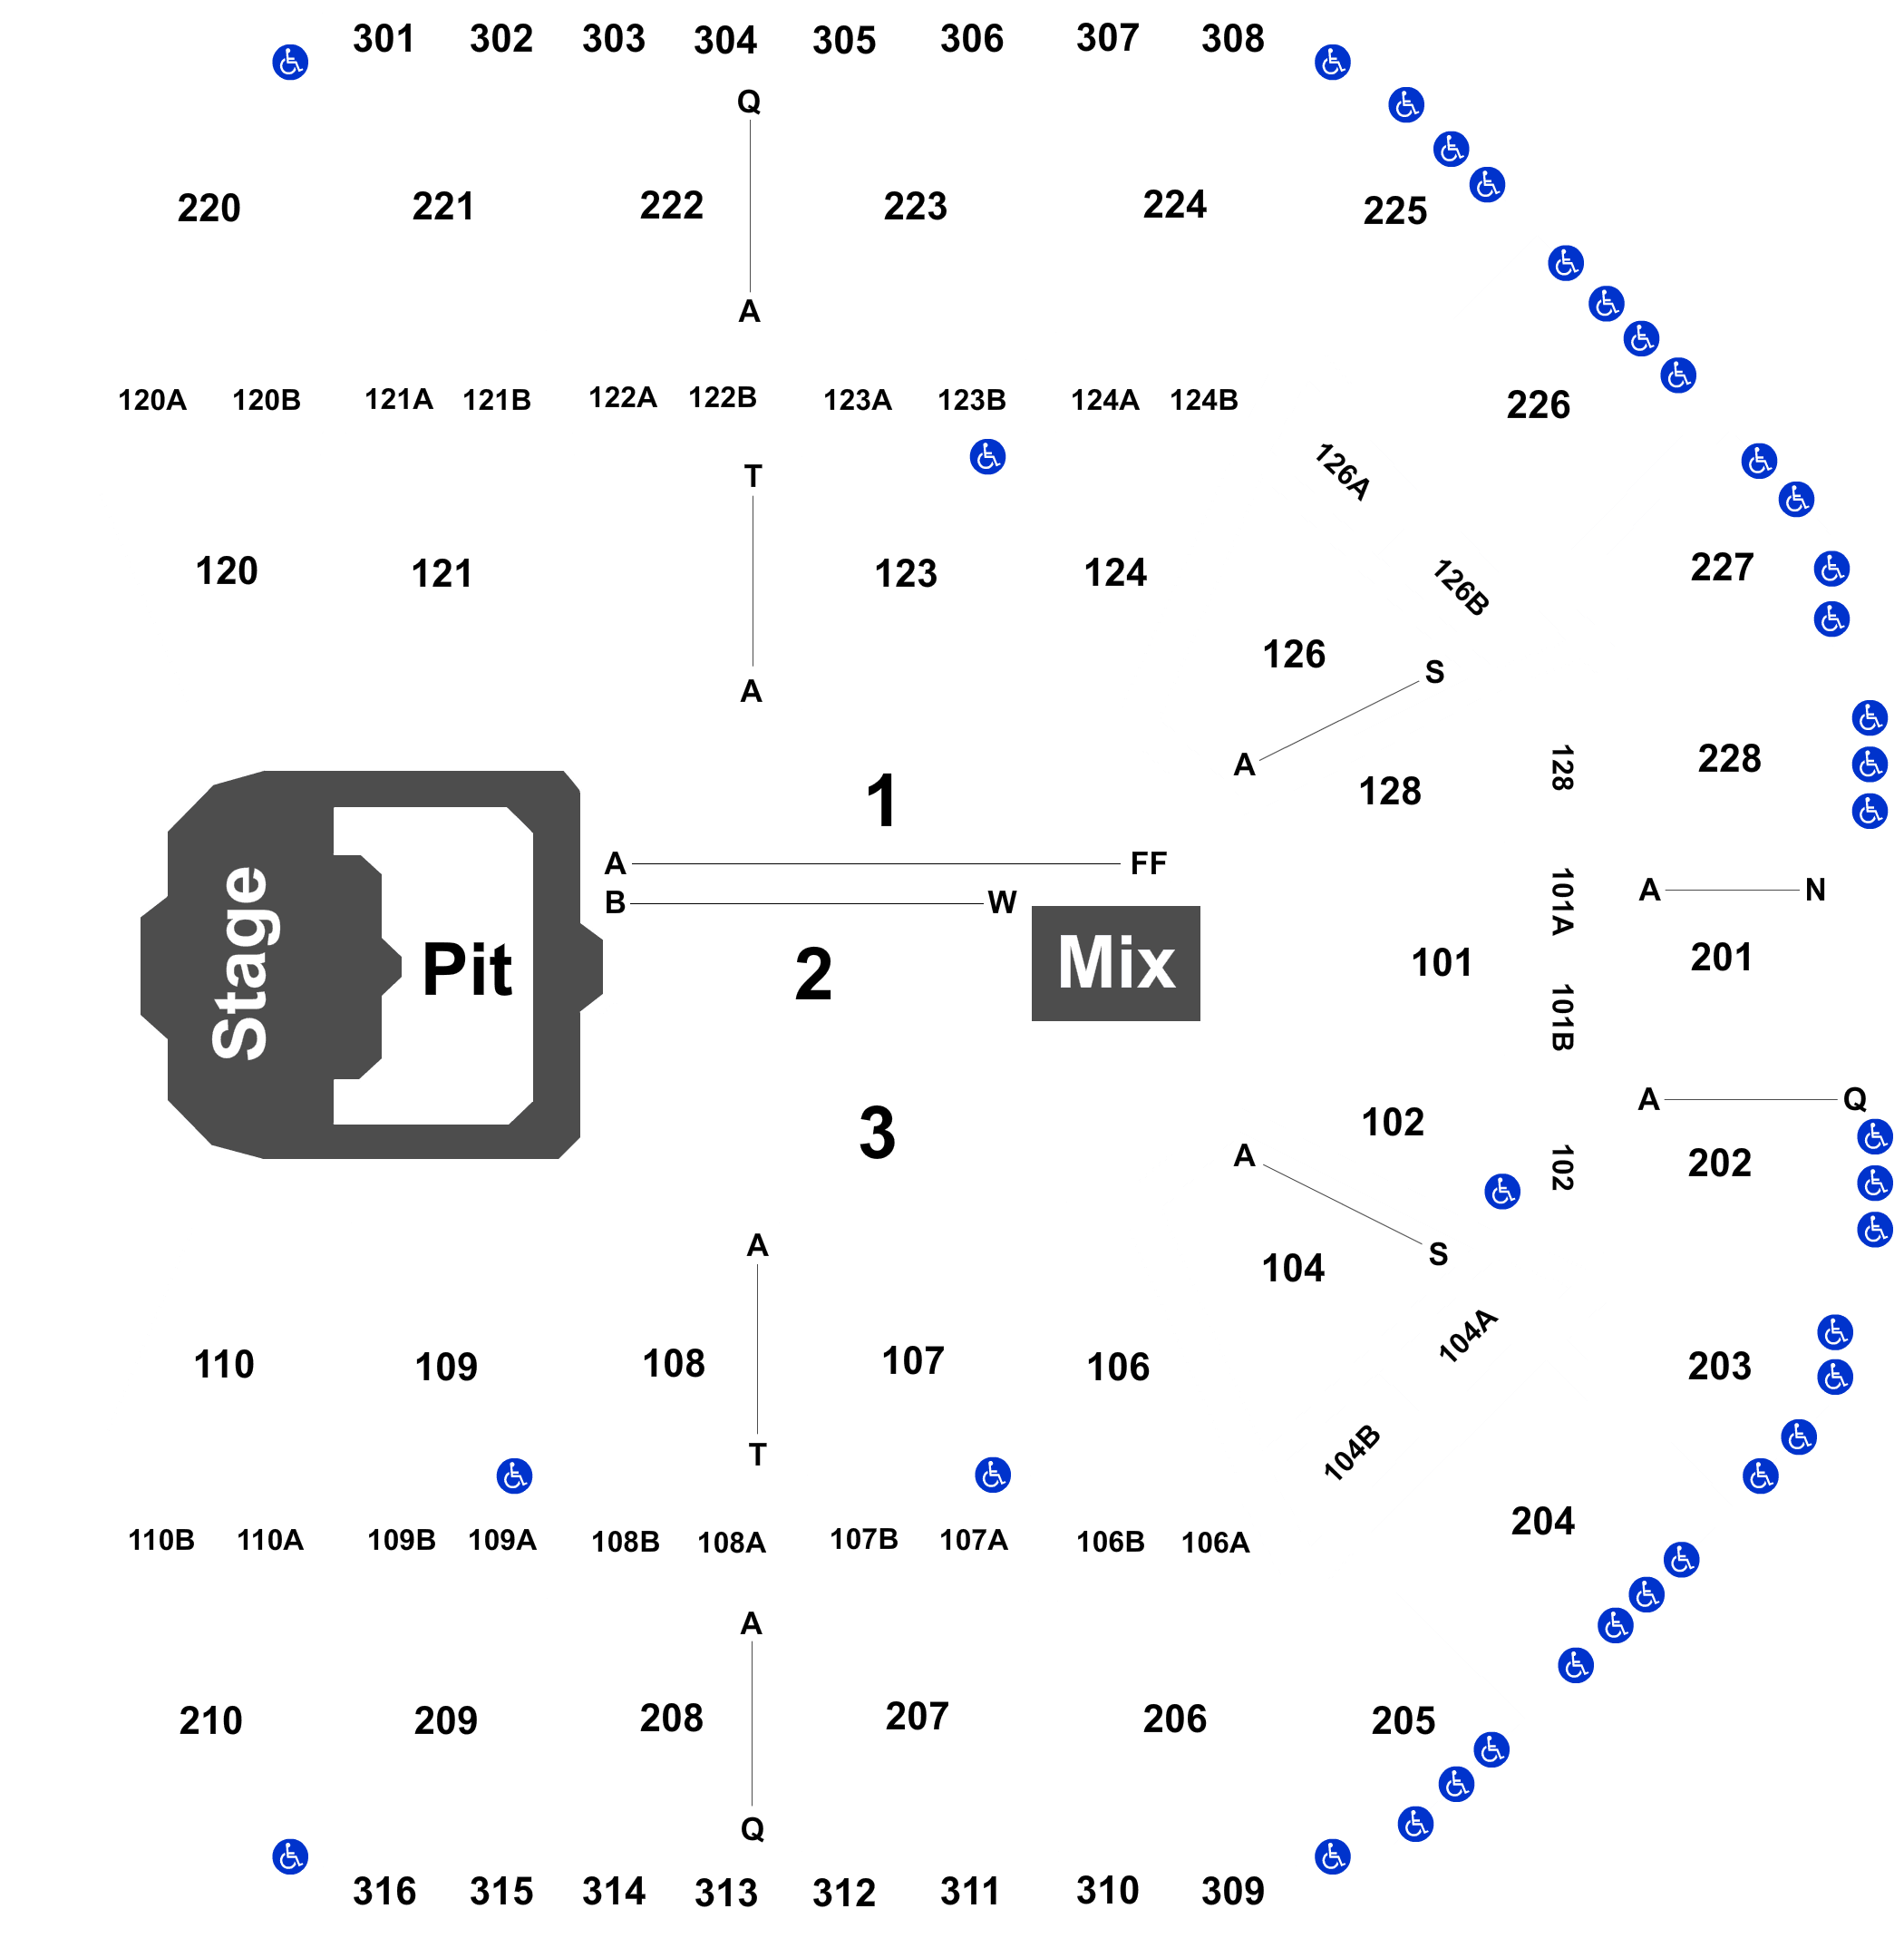 Van Andel Arena Hockey Seating Chart